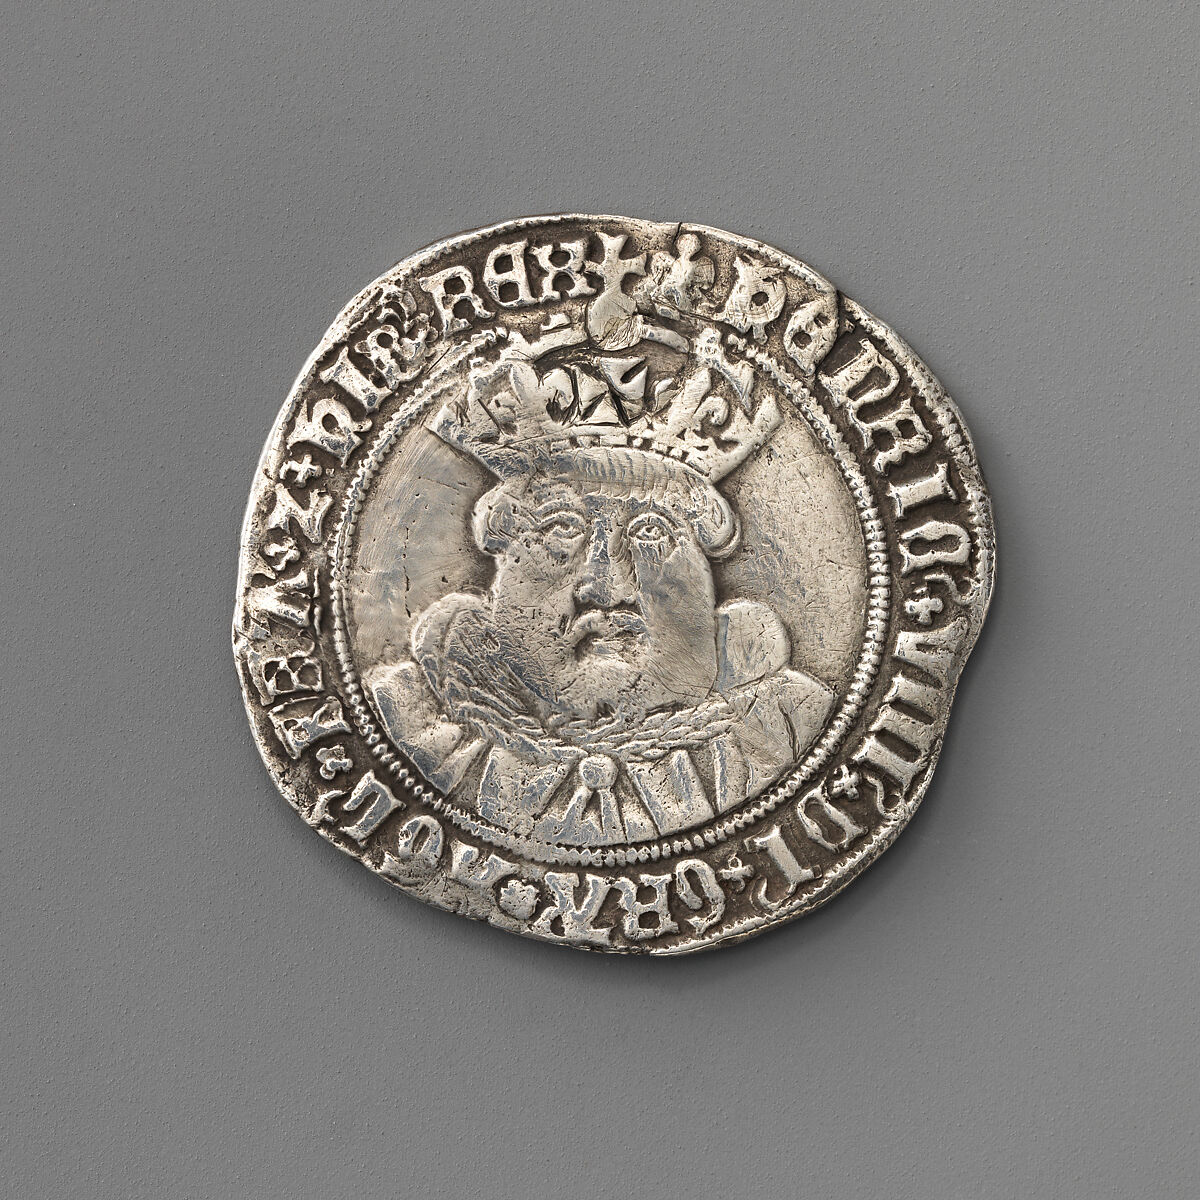 Testoon of Henry VIII (third coinage), Silver, British, London